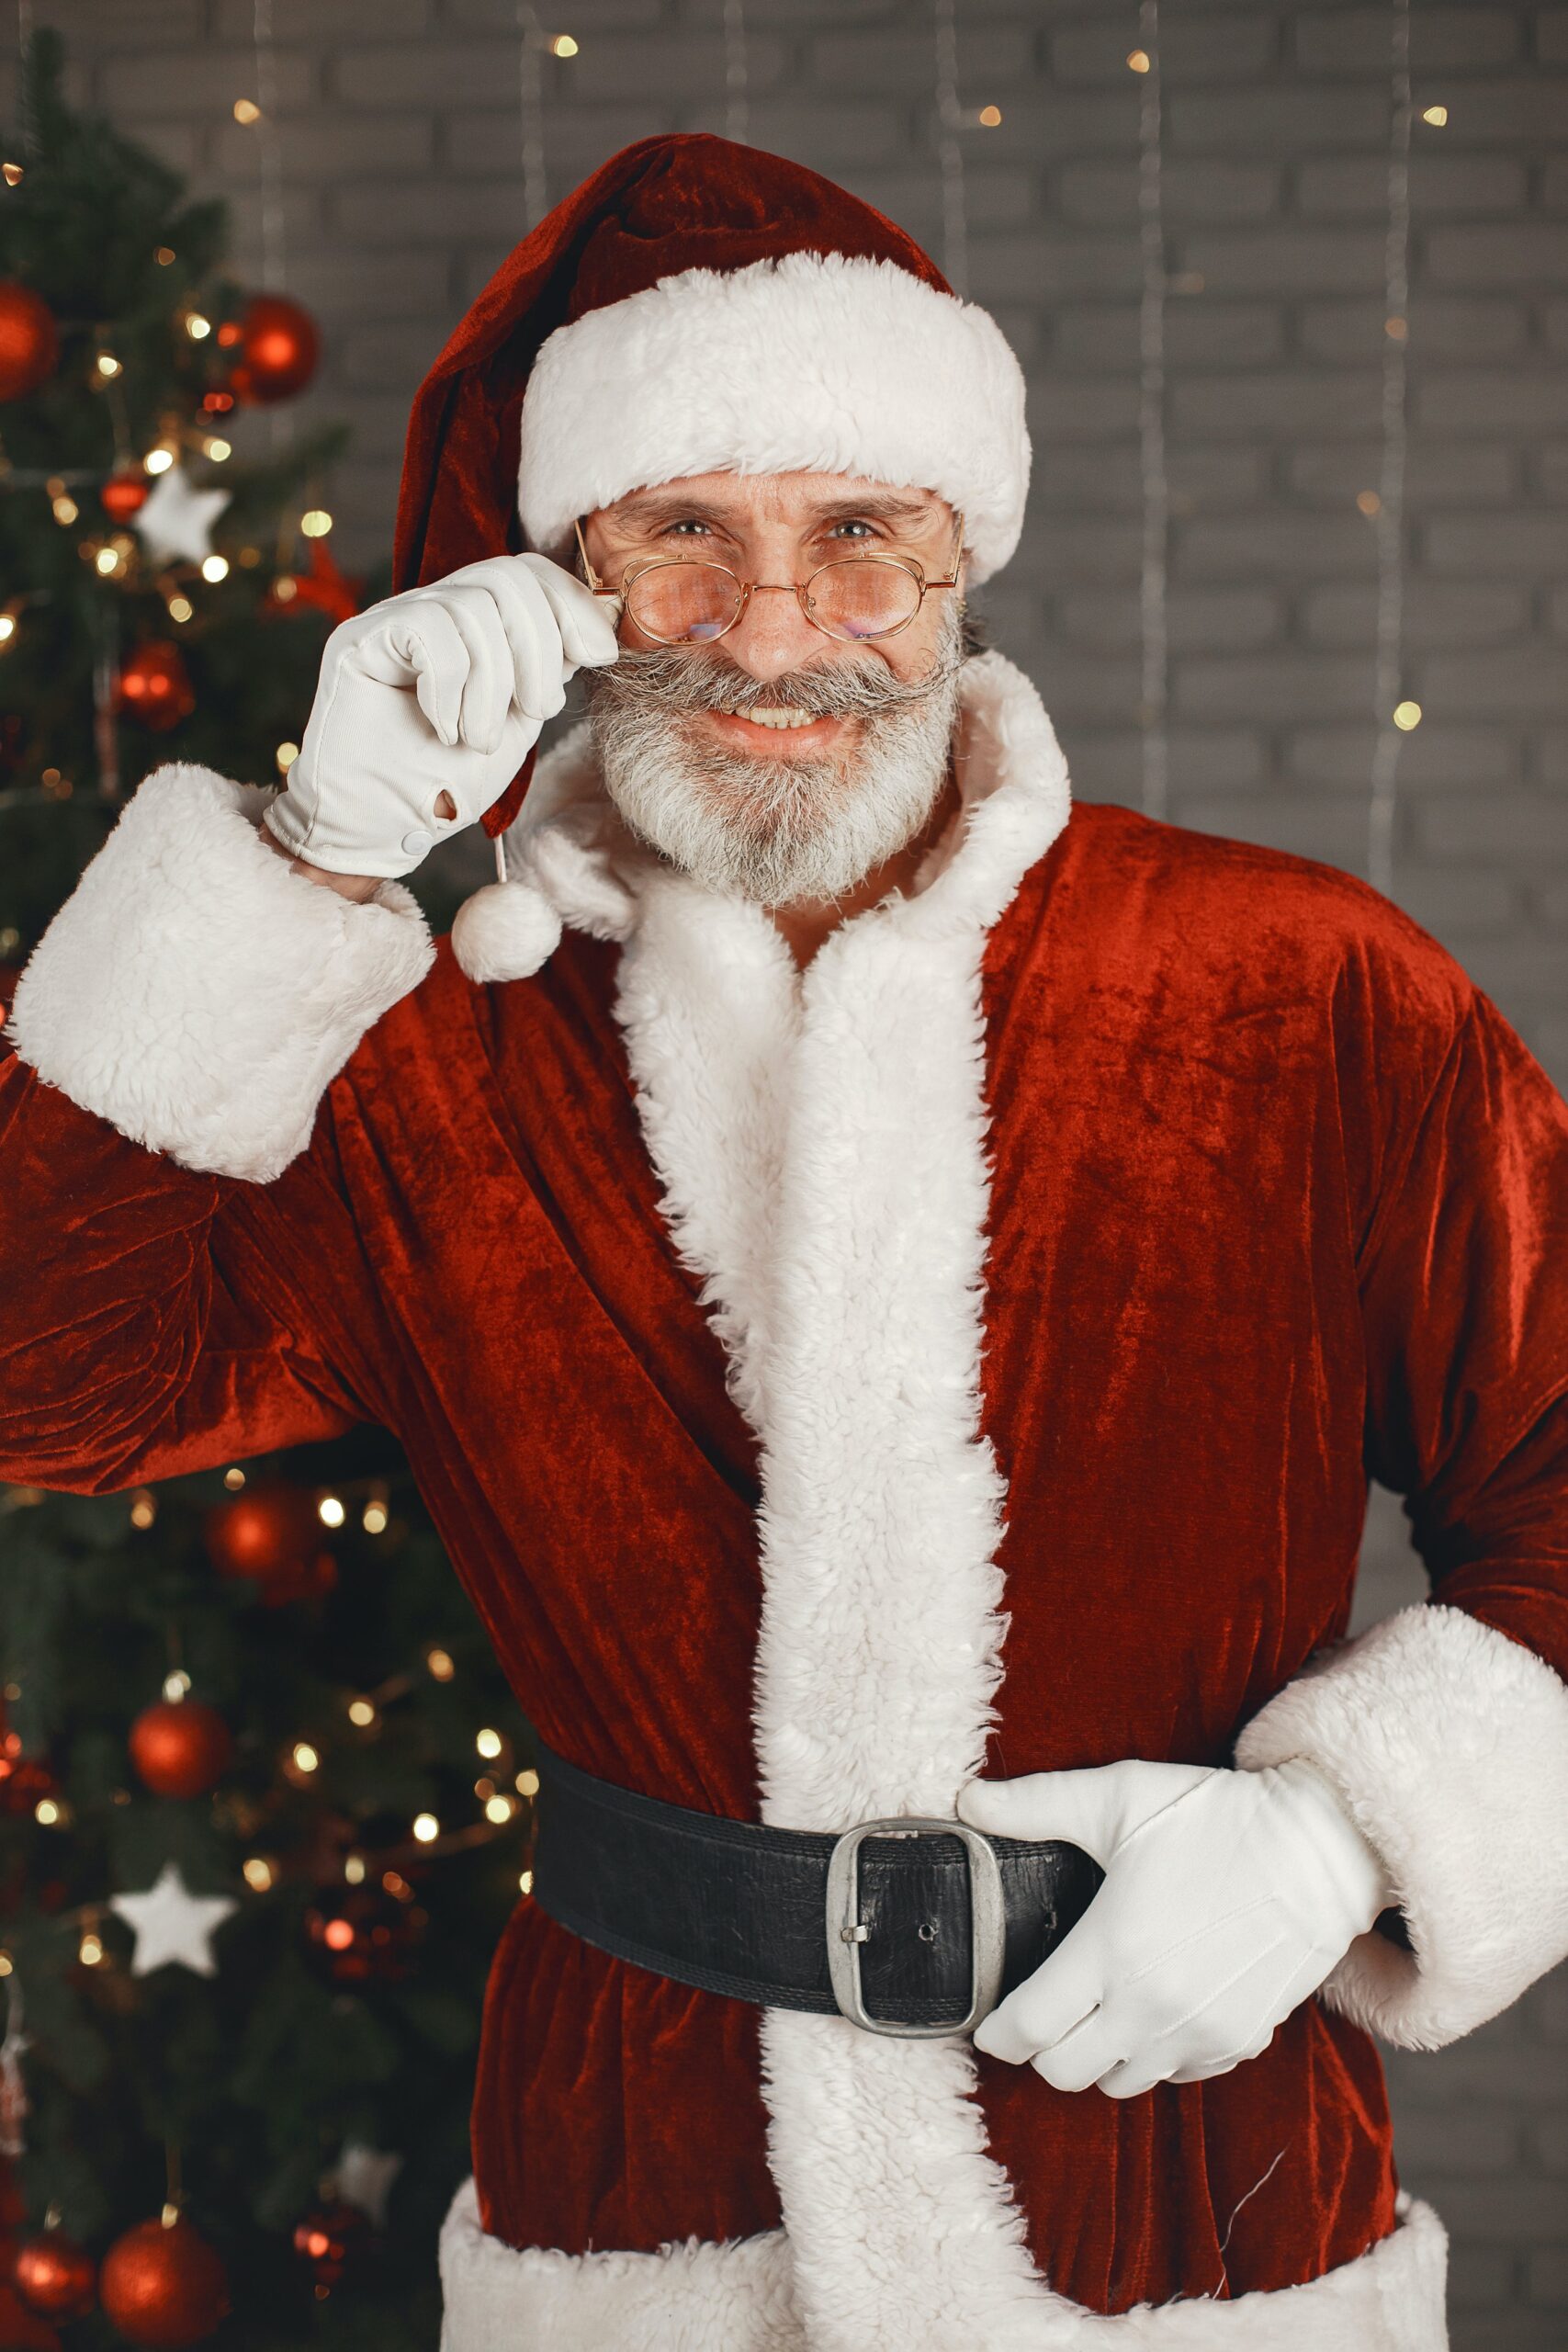 Merry Christmas Wishes for Secret Santa